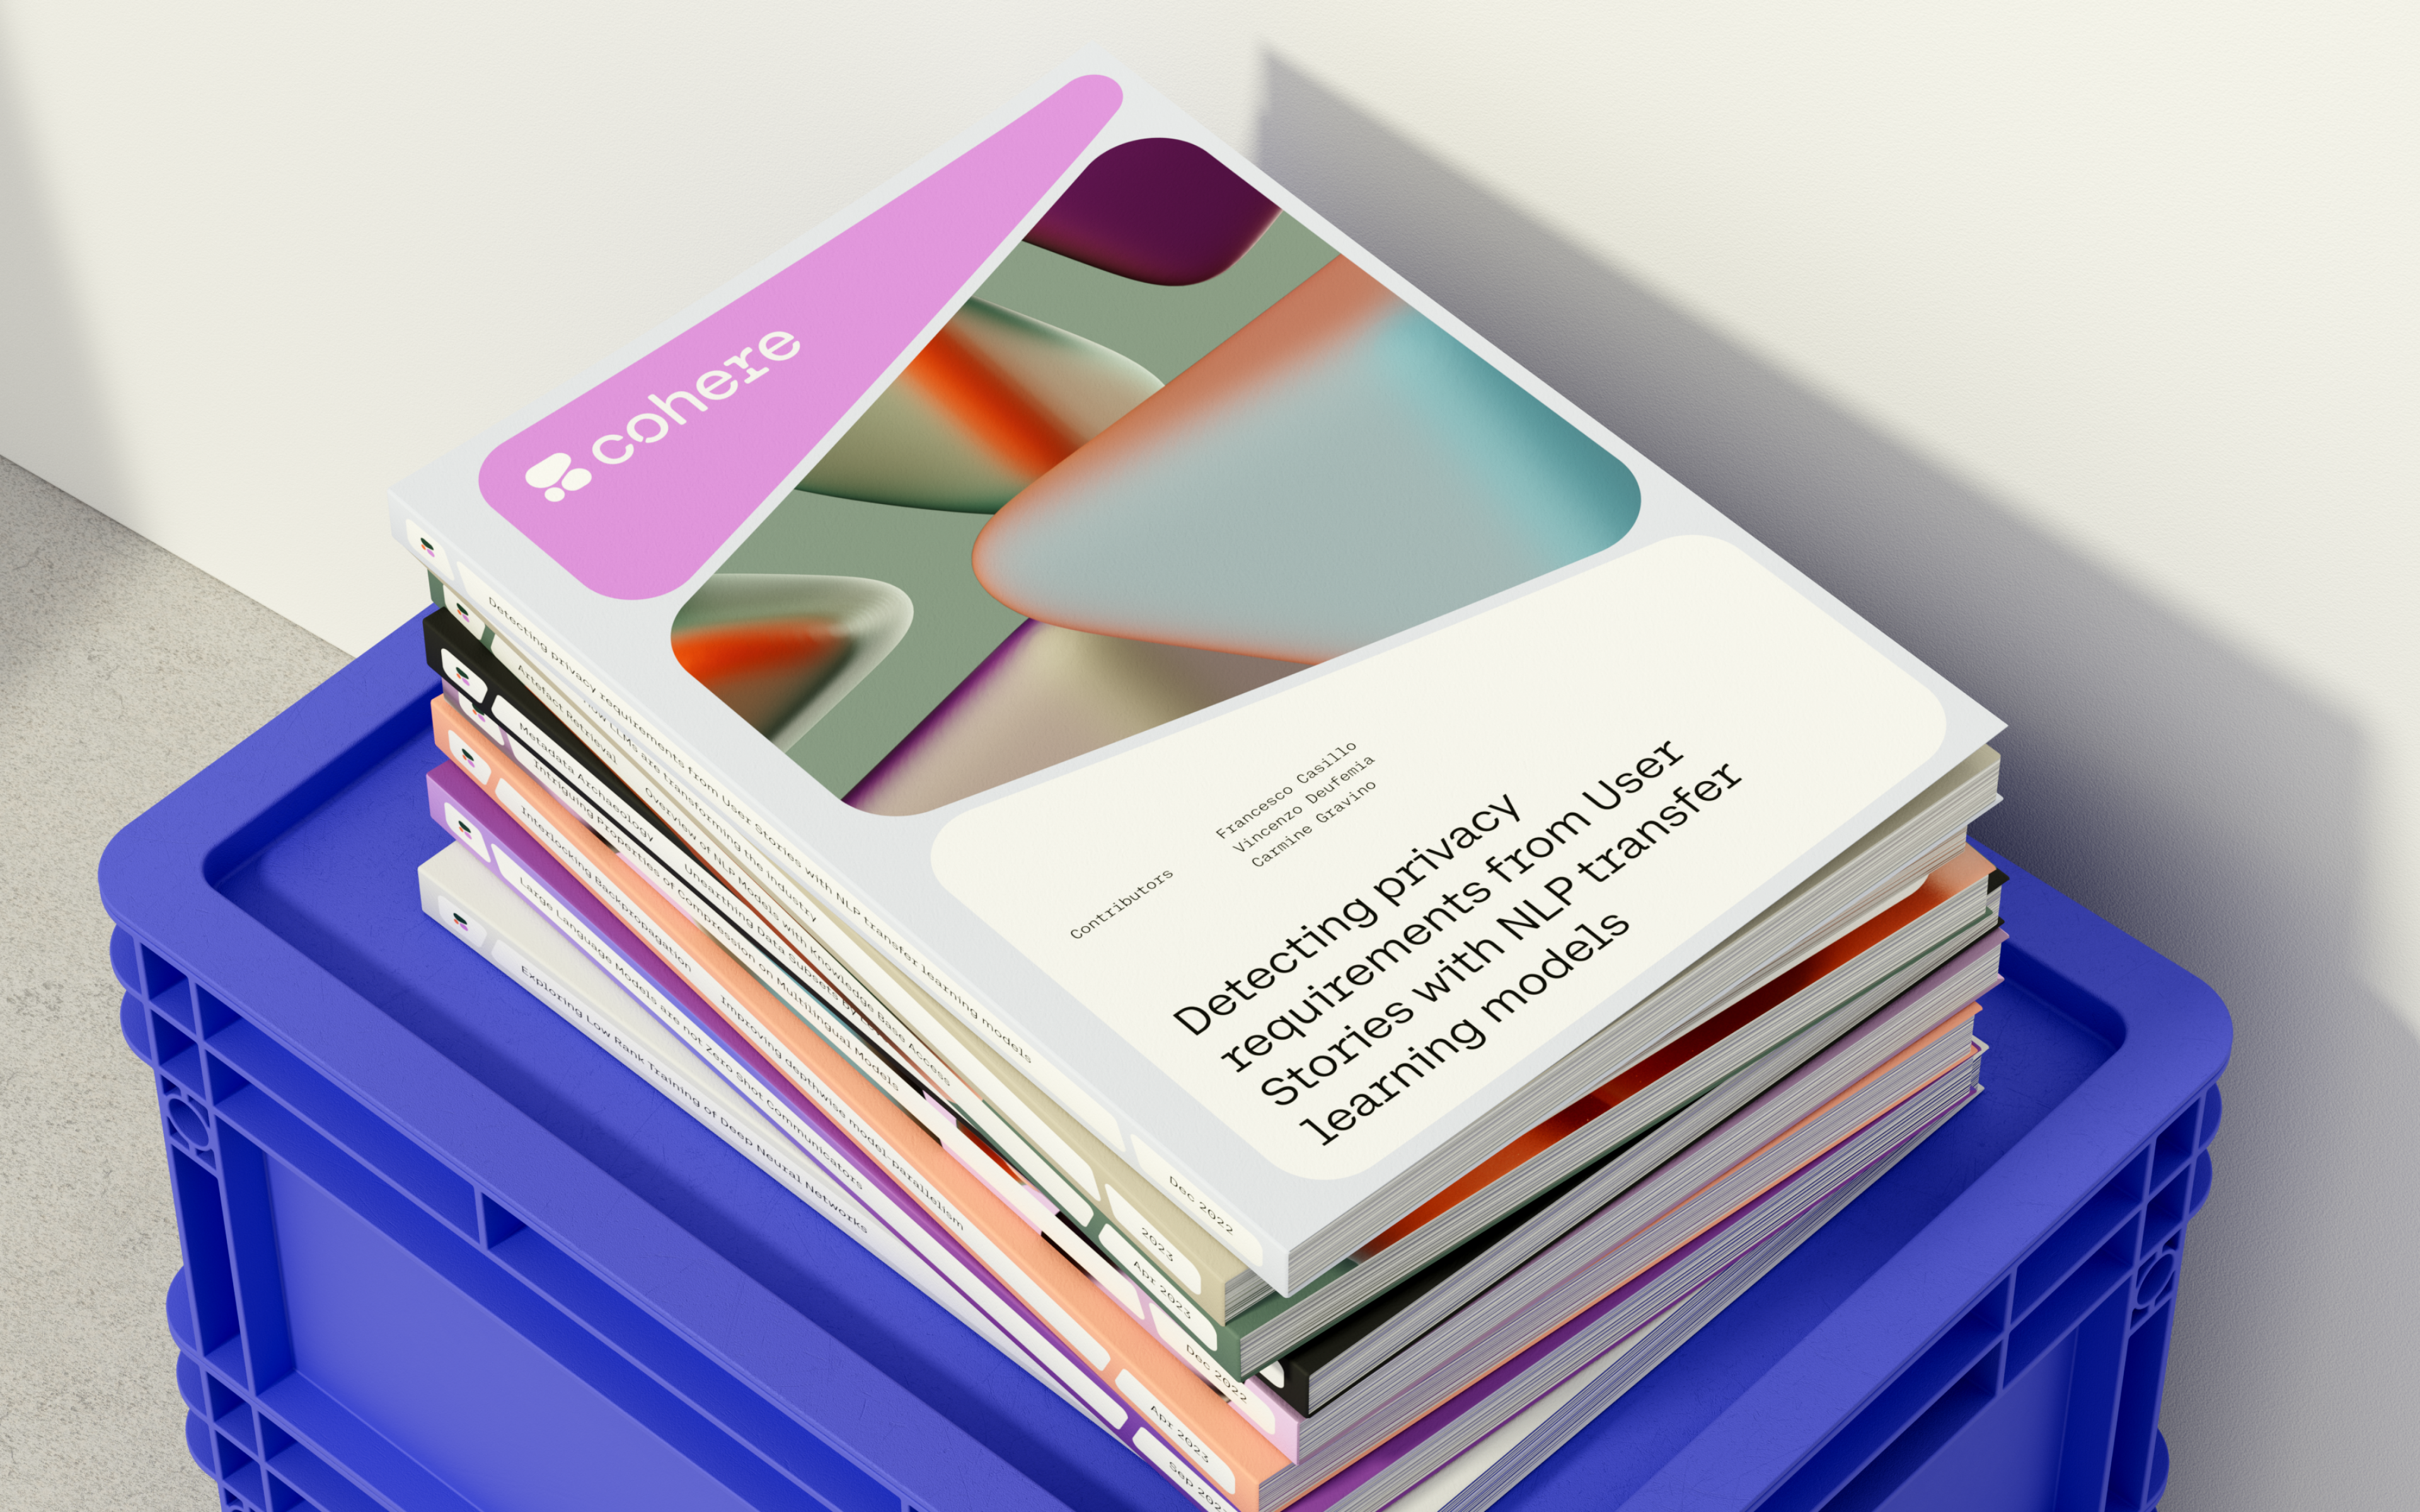 Brand identity and brochure cover for AI platform for business Cohere designed by Pentagram partners Jody Hudson-Powell & Luke Powell